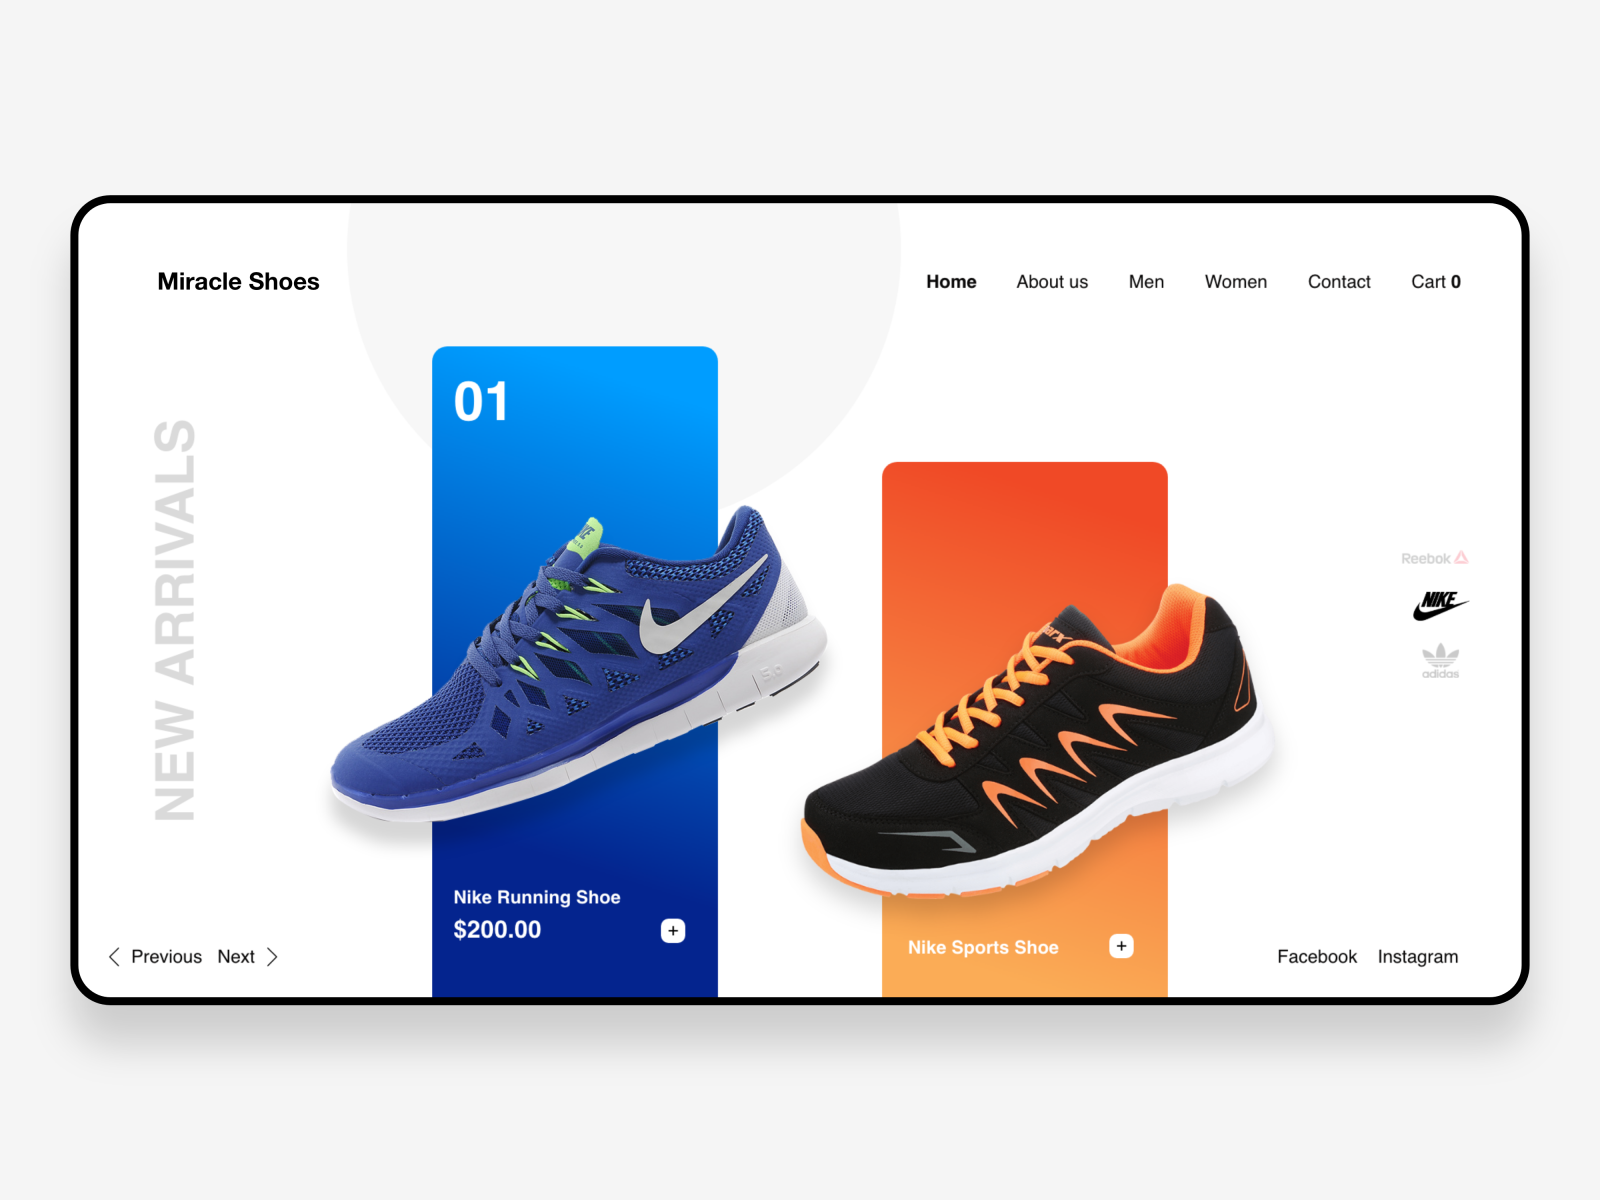 ArtStation - Realistic 3D shoes for e-commerce